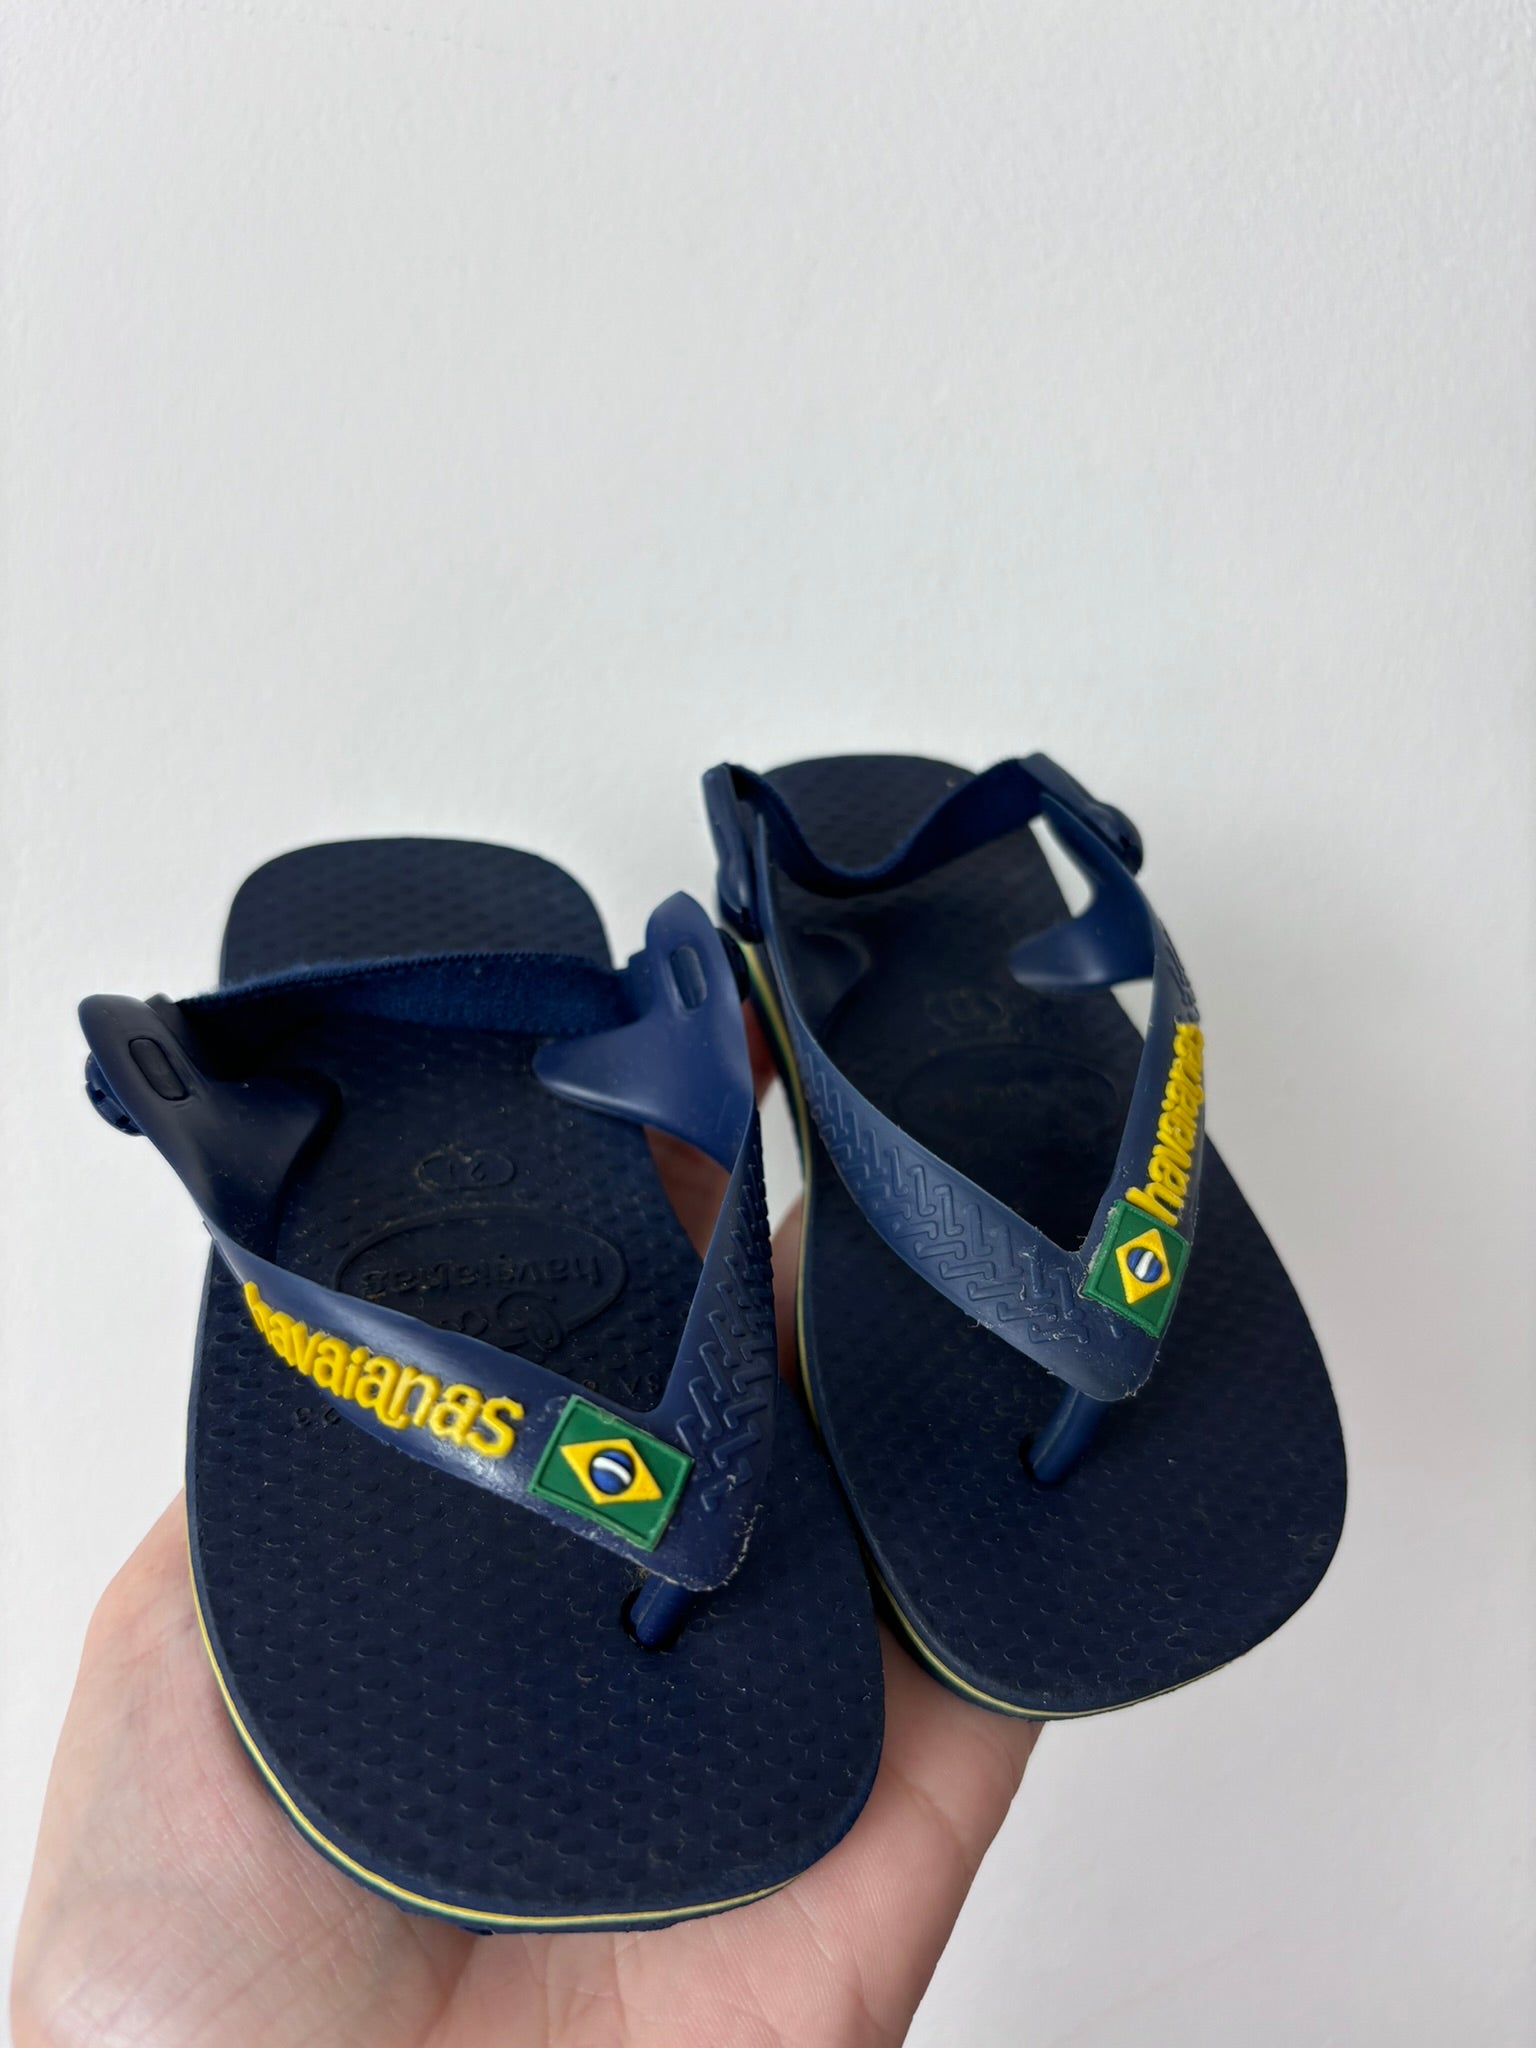 Havaianas EU 23 UK 6-Shoes-Second Snuggle Preloved